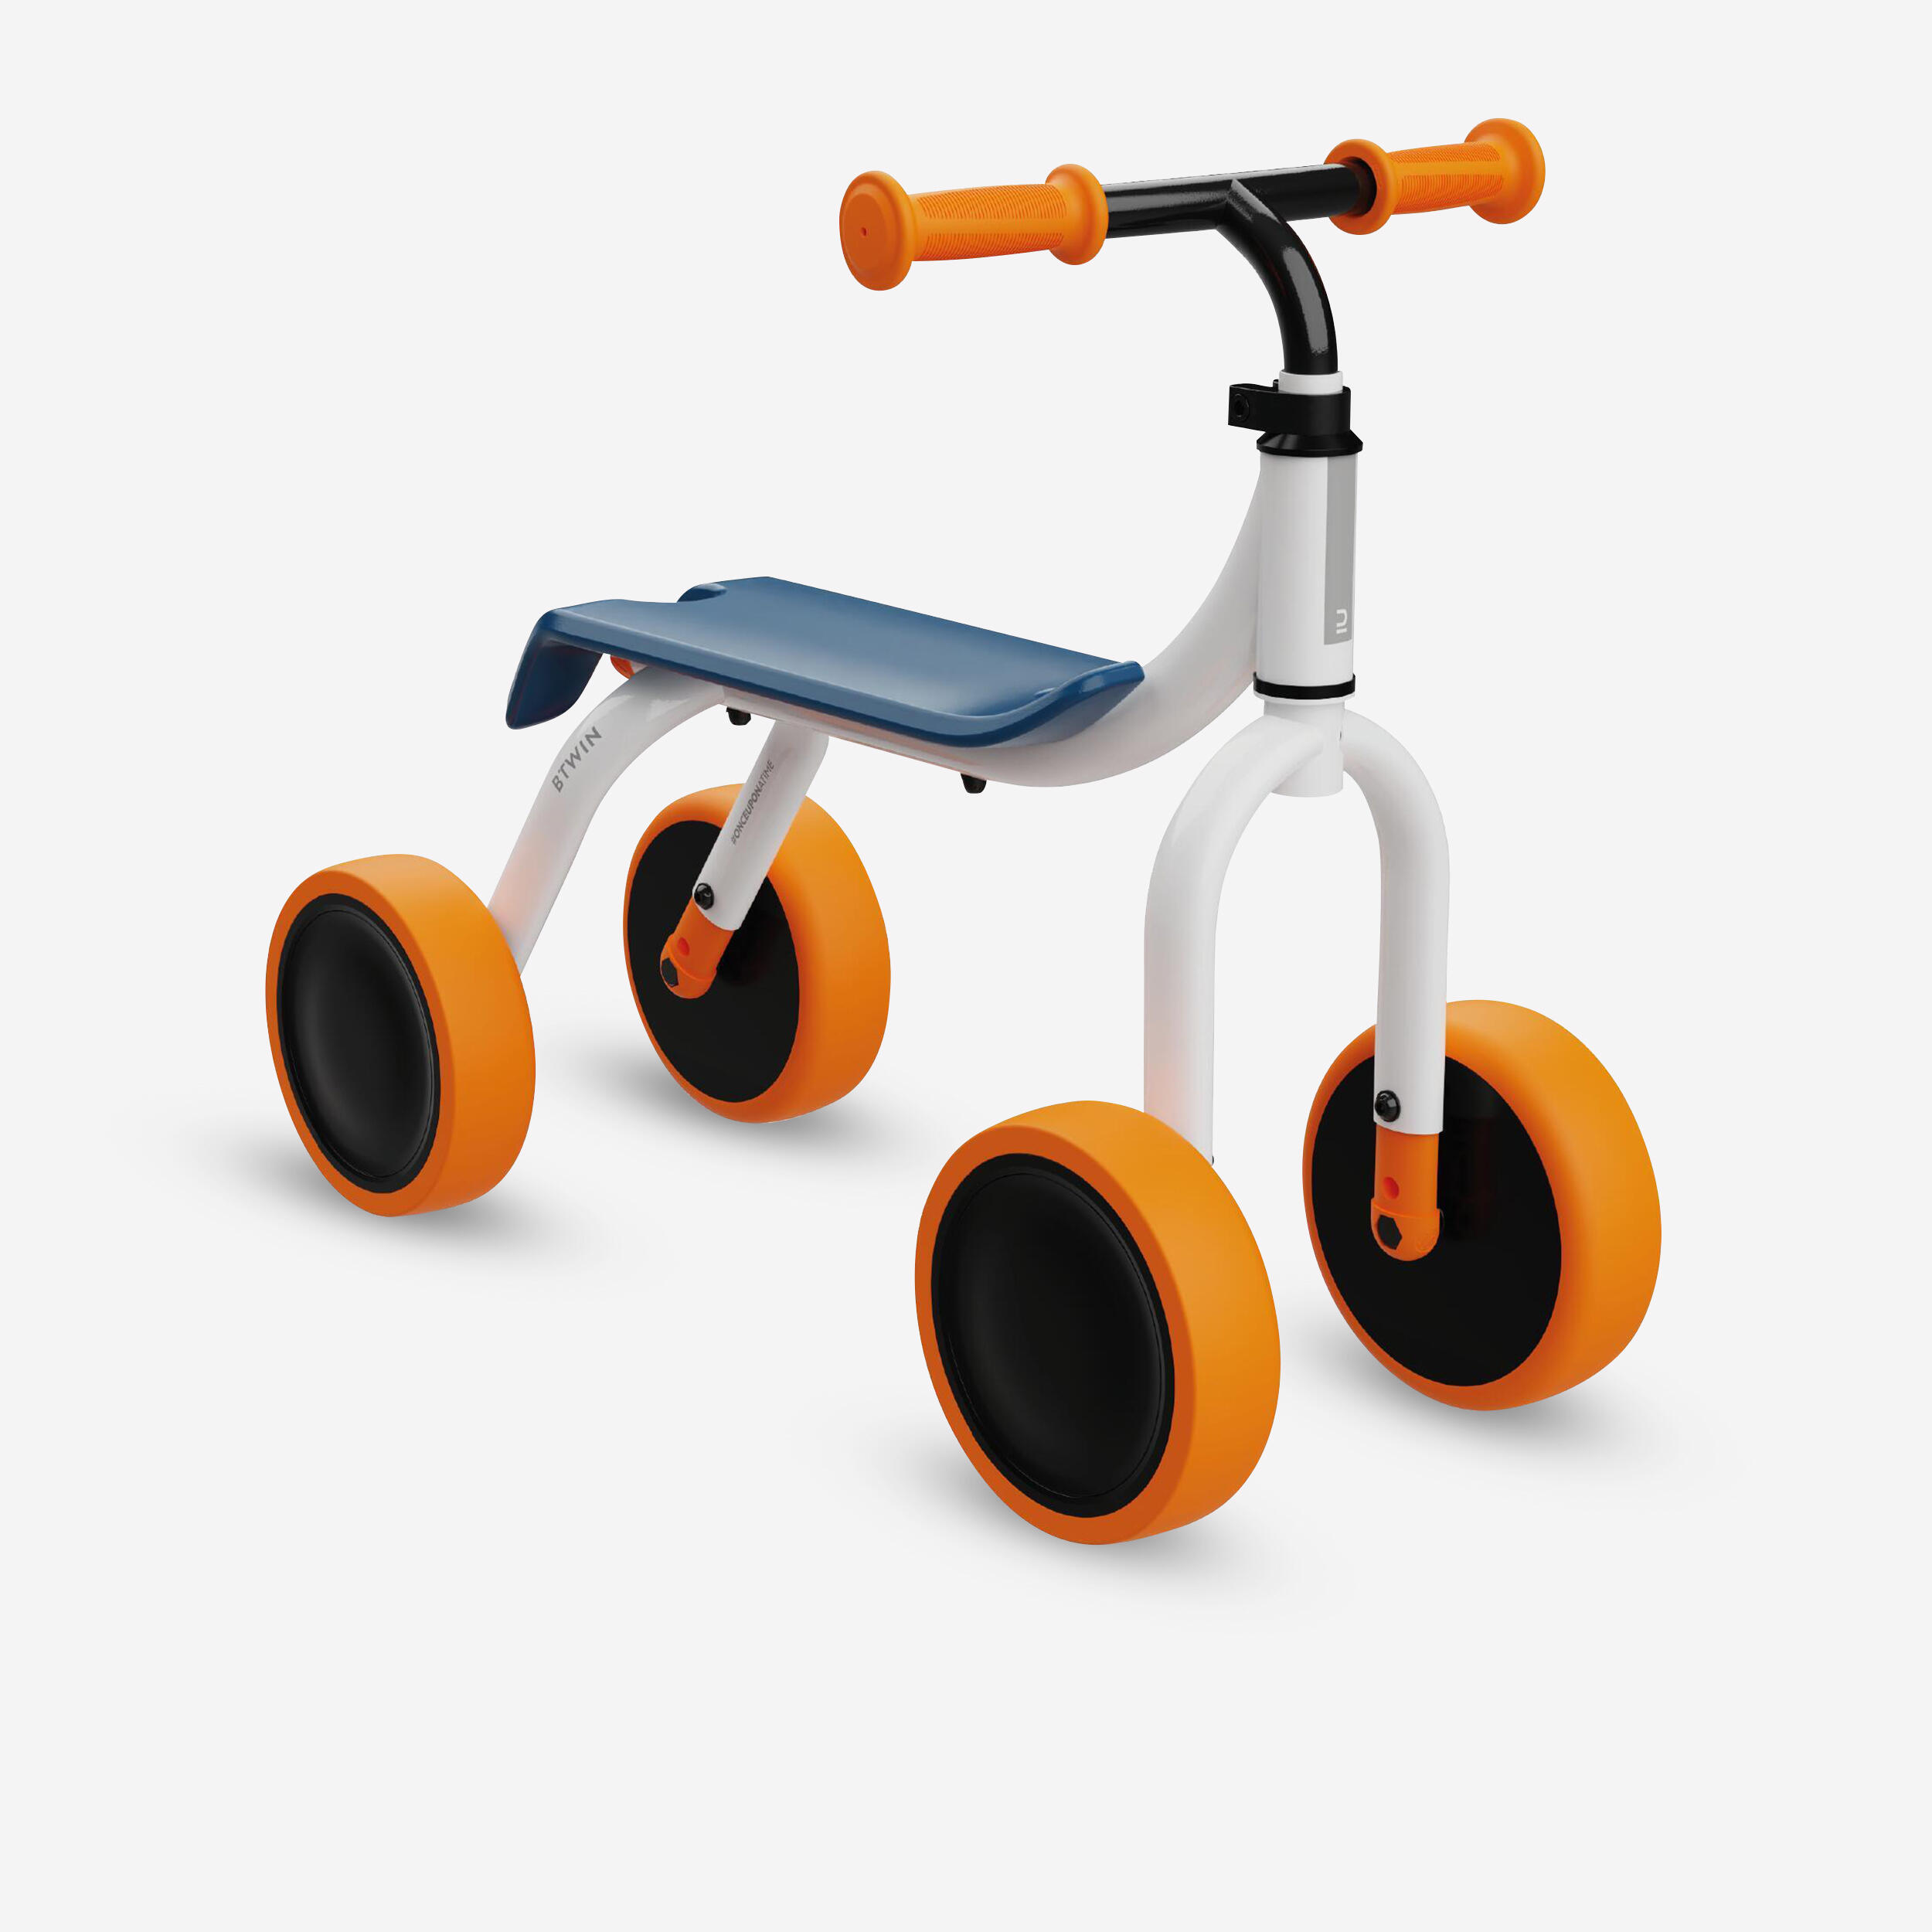 BTWIN Convertible 2-in-1 Ride-On to Balance Bike - White/Orange